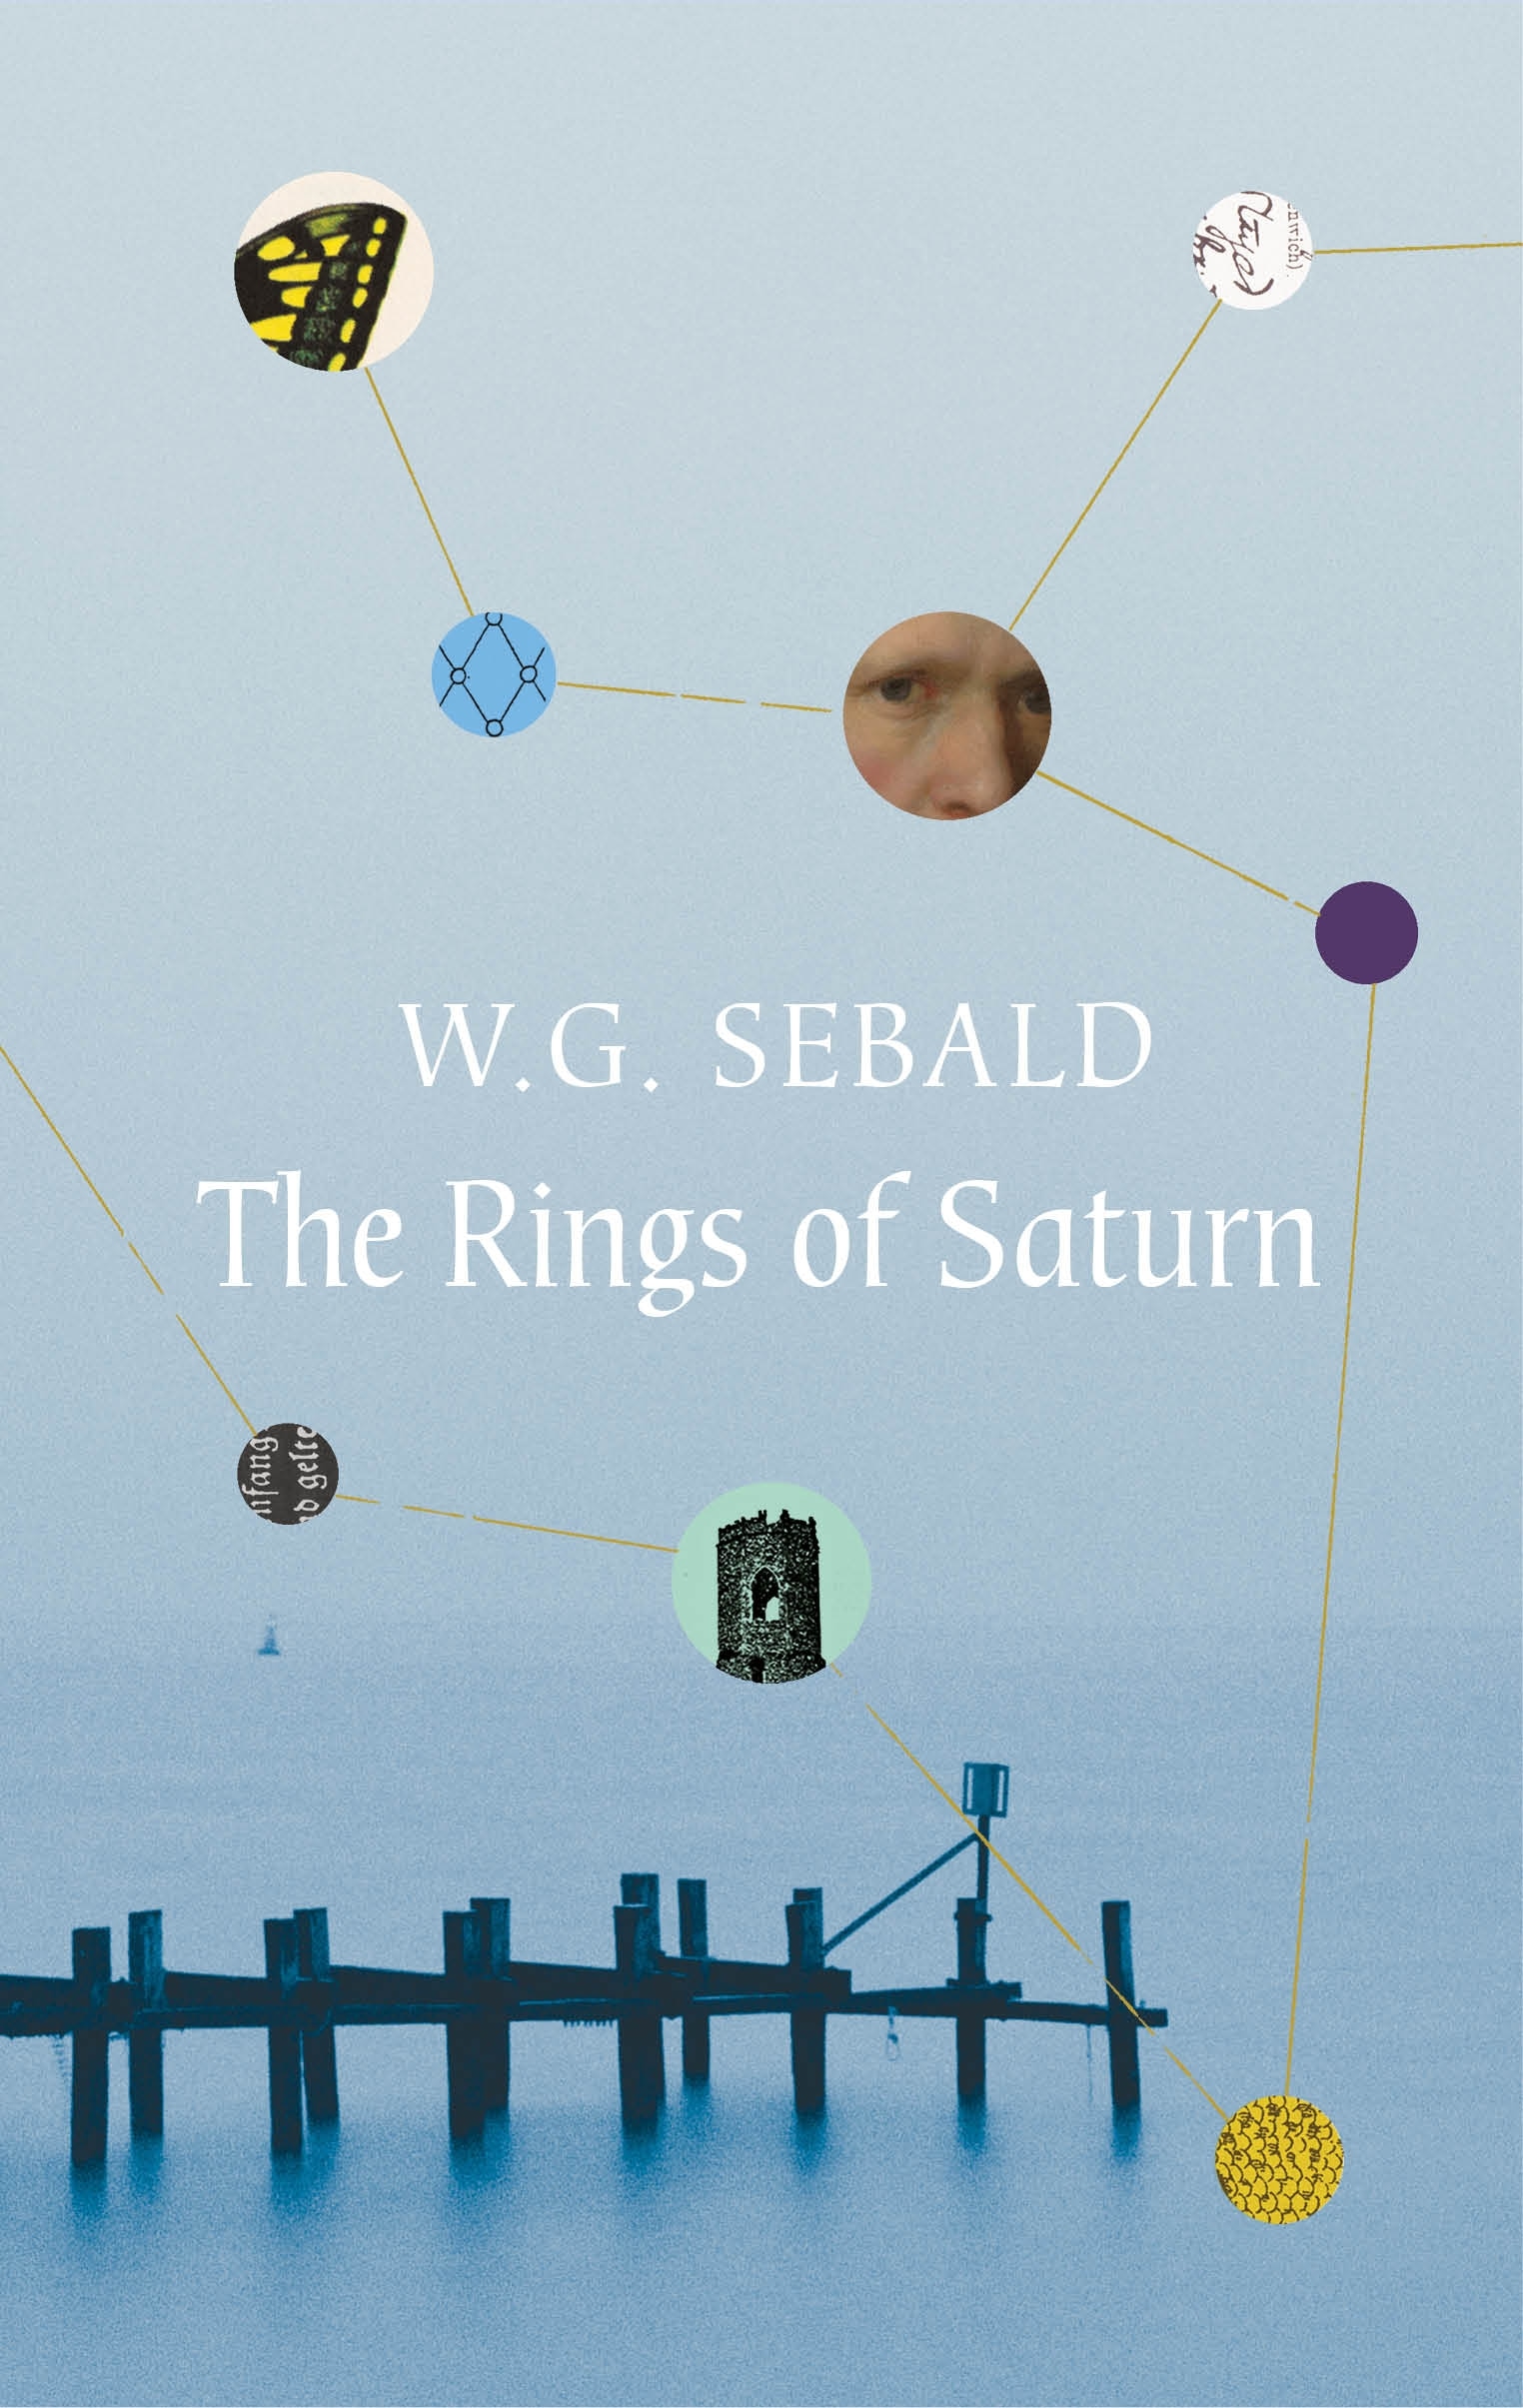 Book “The Rings of Saturn” by W.G. Sebald — November 5, 2020